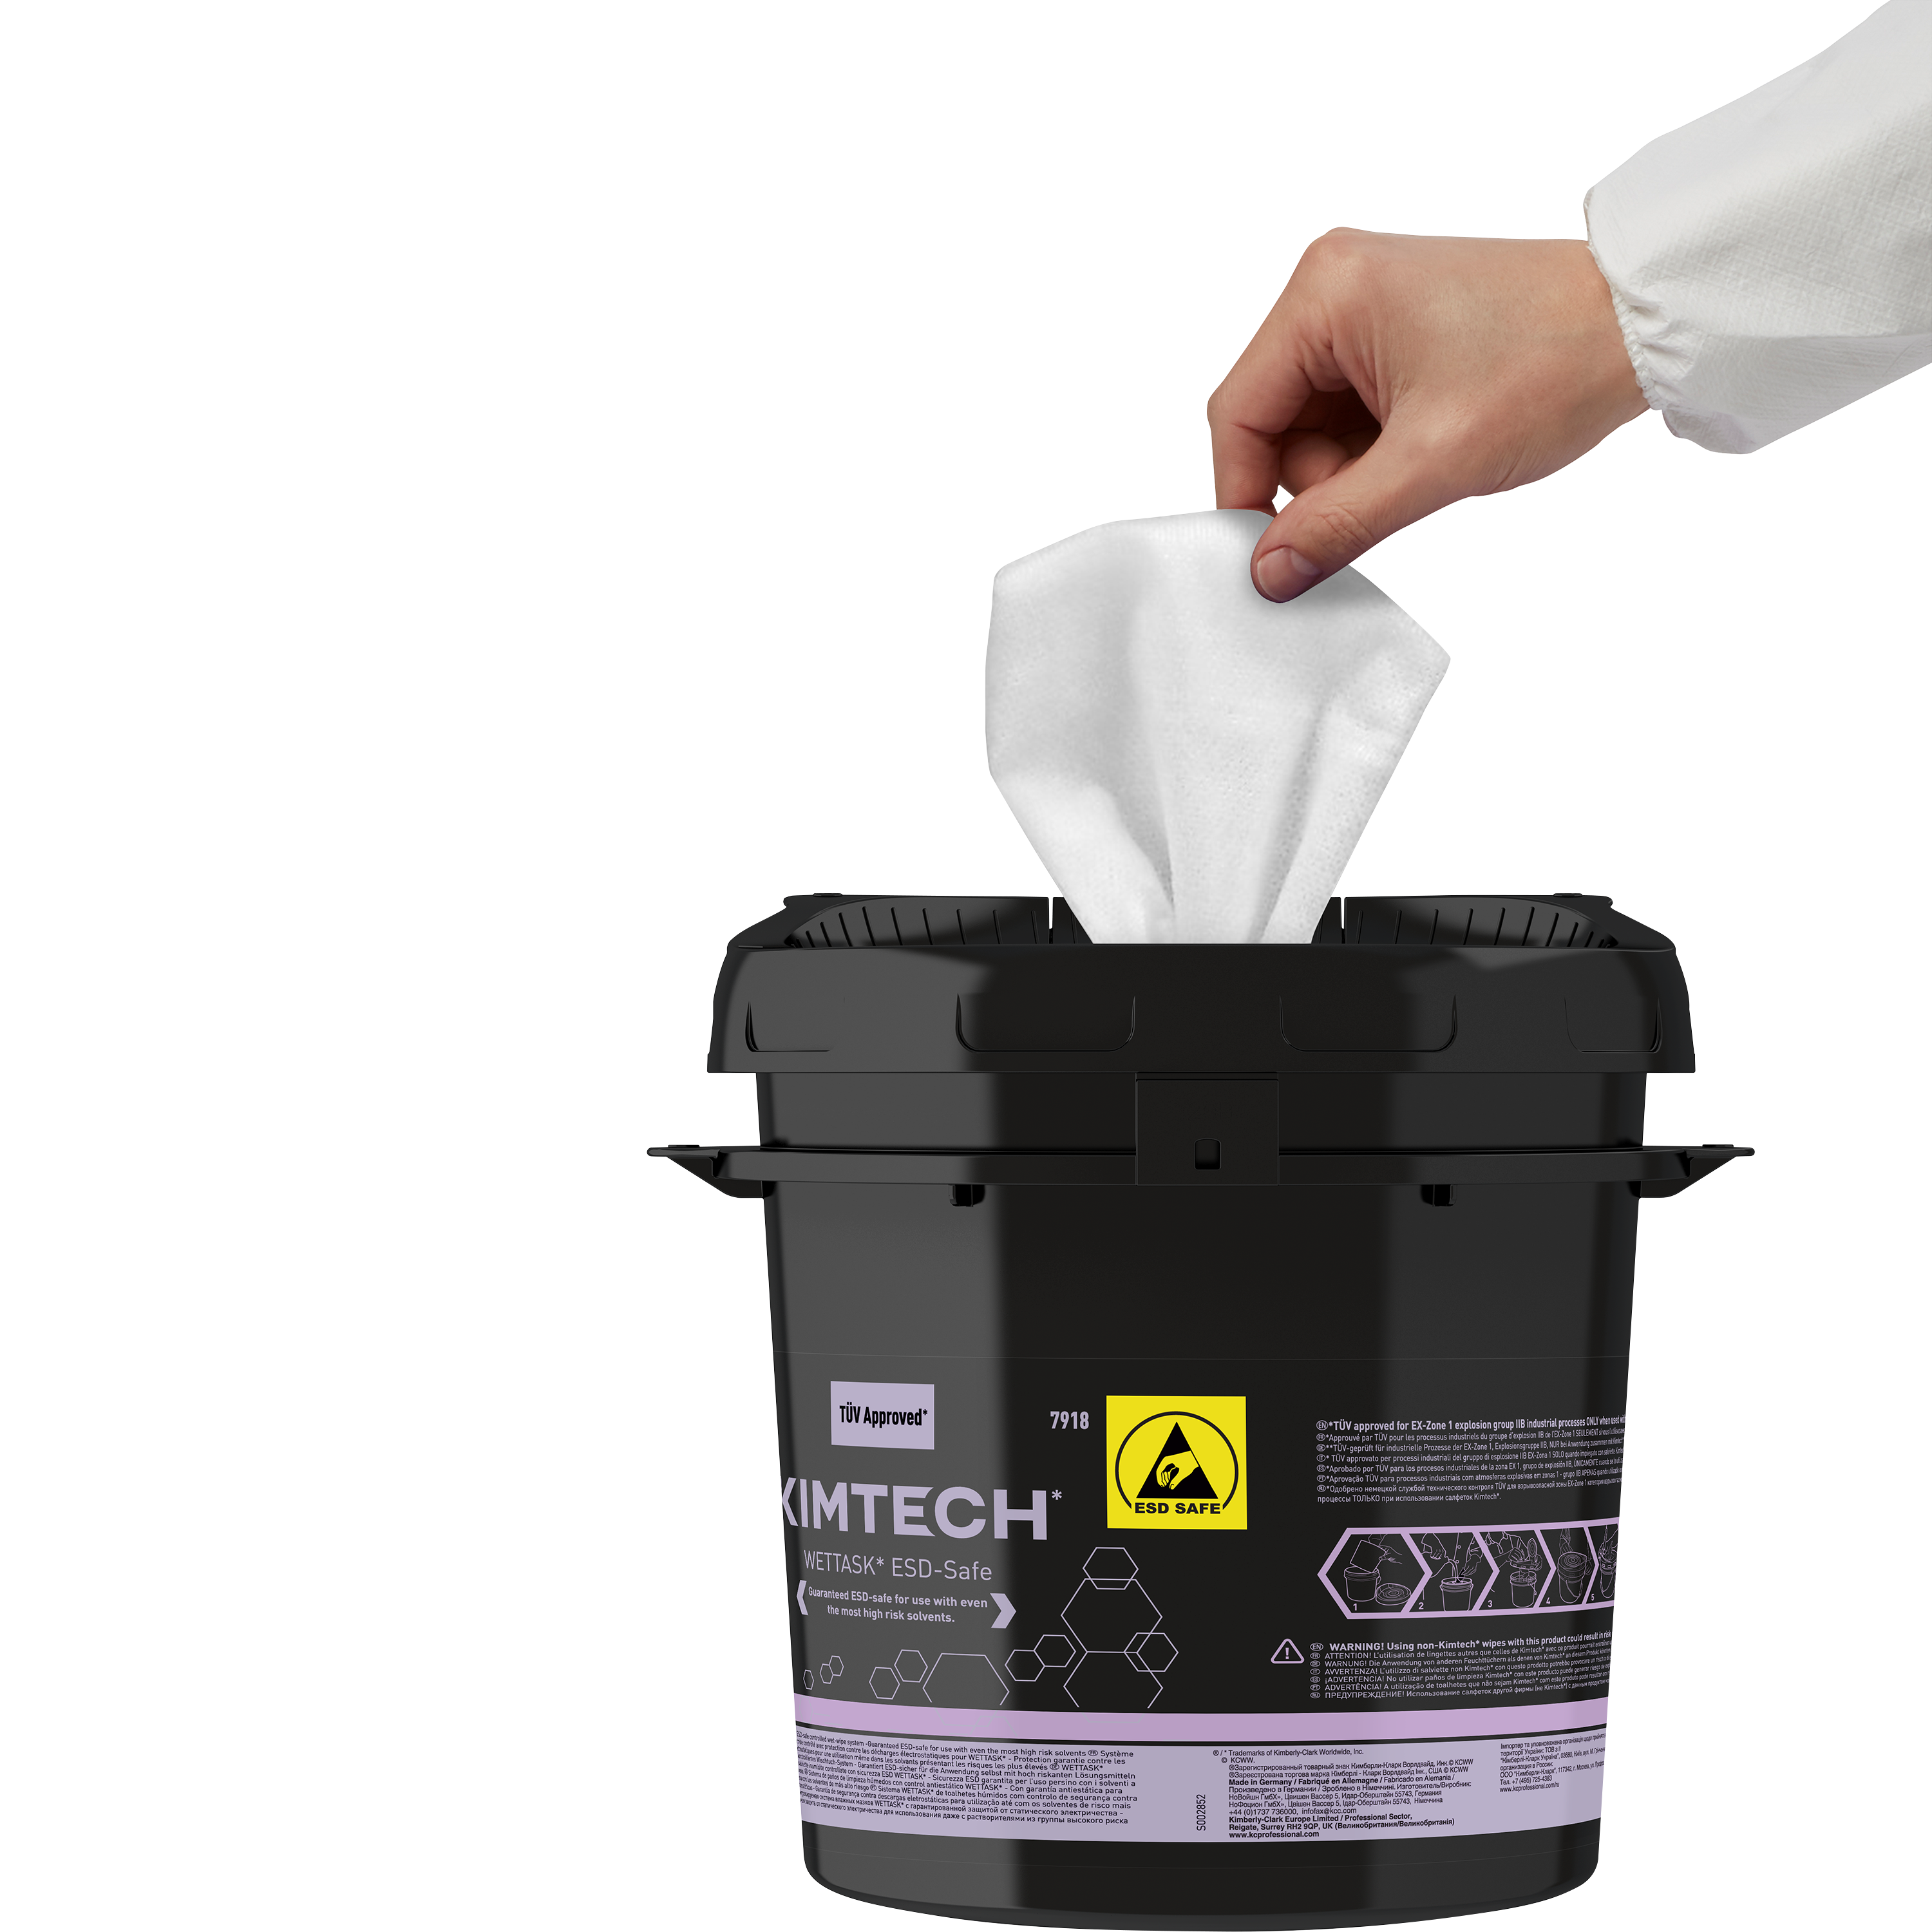 Kimtech® Wettask™ ESD-Roll Wiper Dispenser Bucket 7918 - 4 x 5 ltr black bucket - 7918